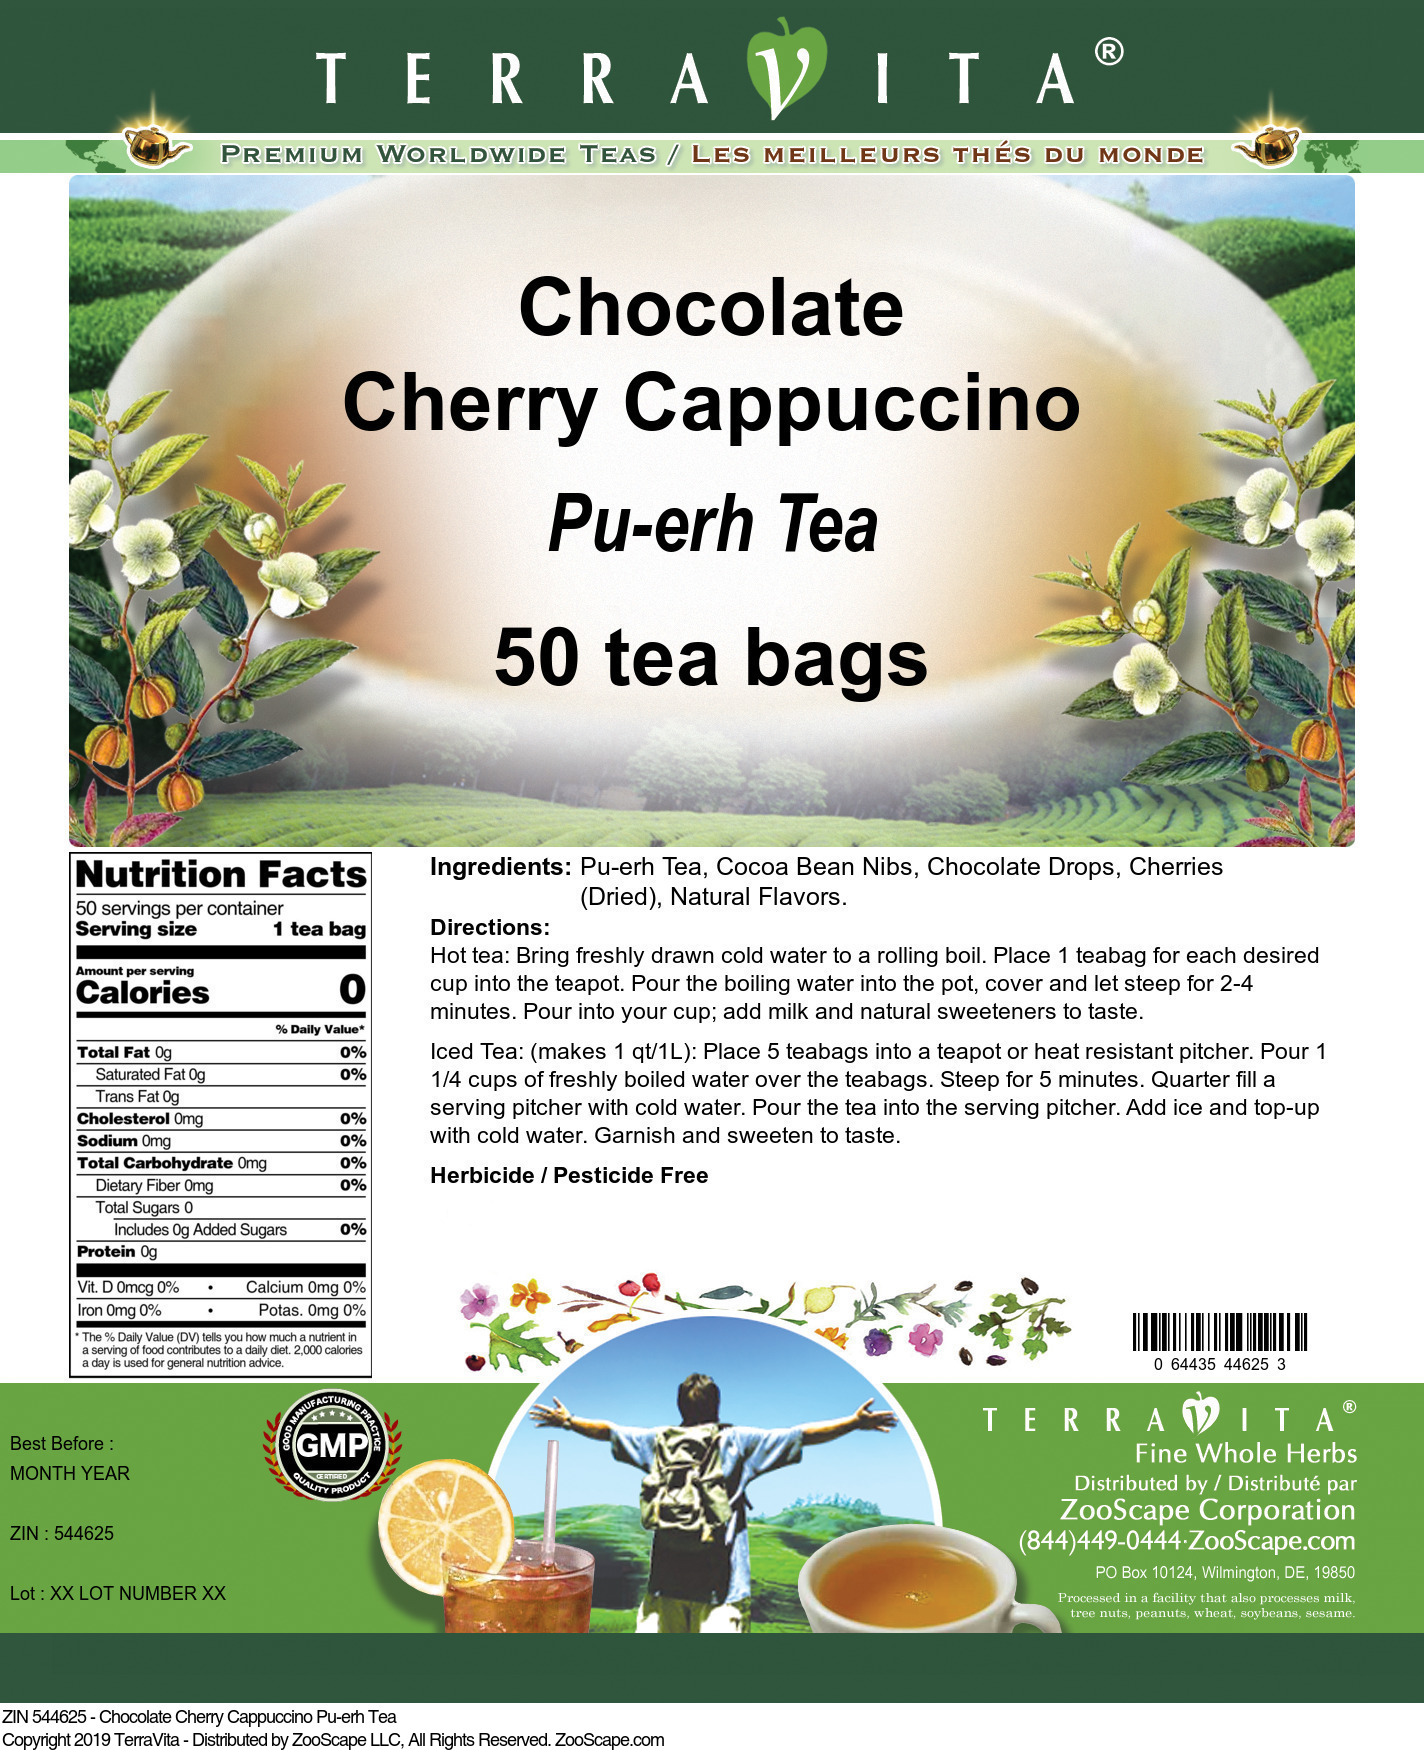 Chocolate Cherry Cappuccino Pu-erh Tea - Label